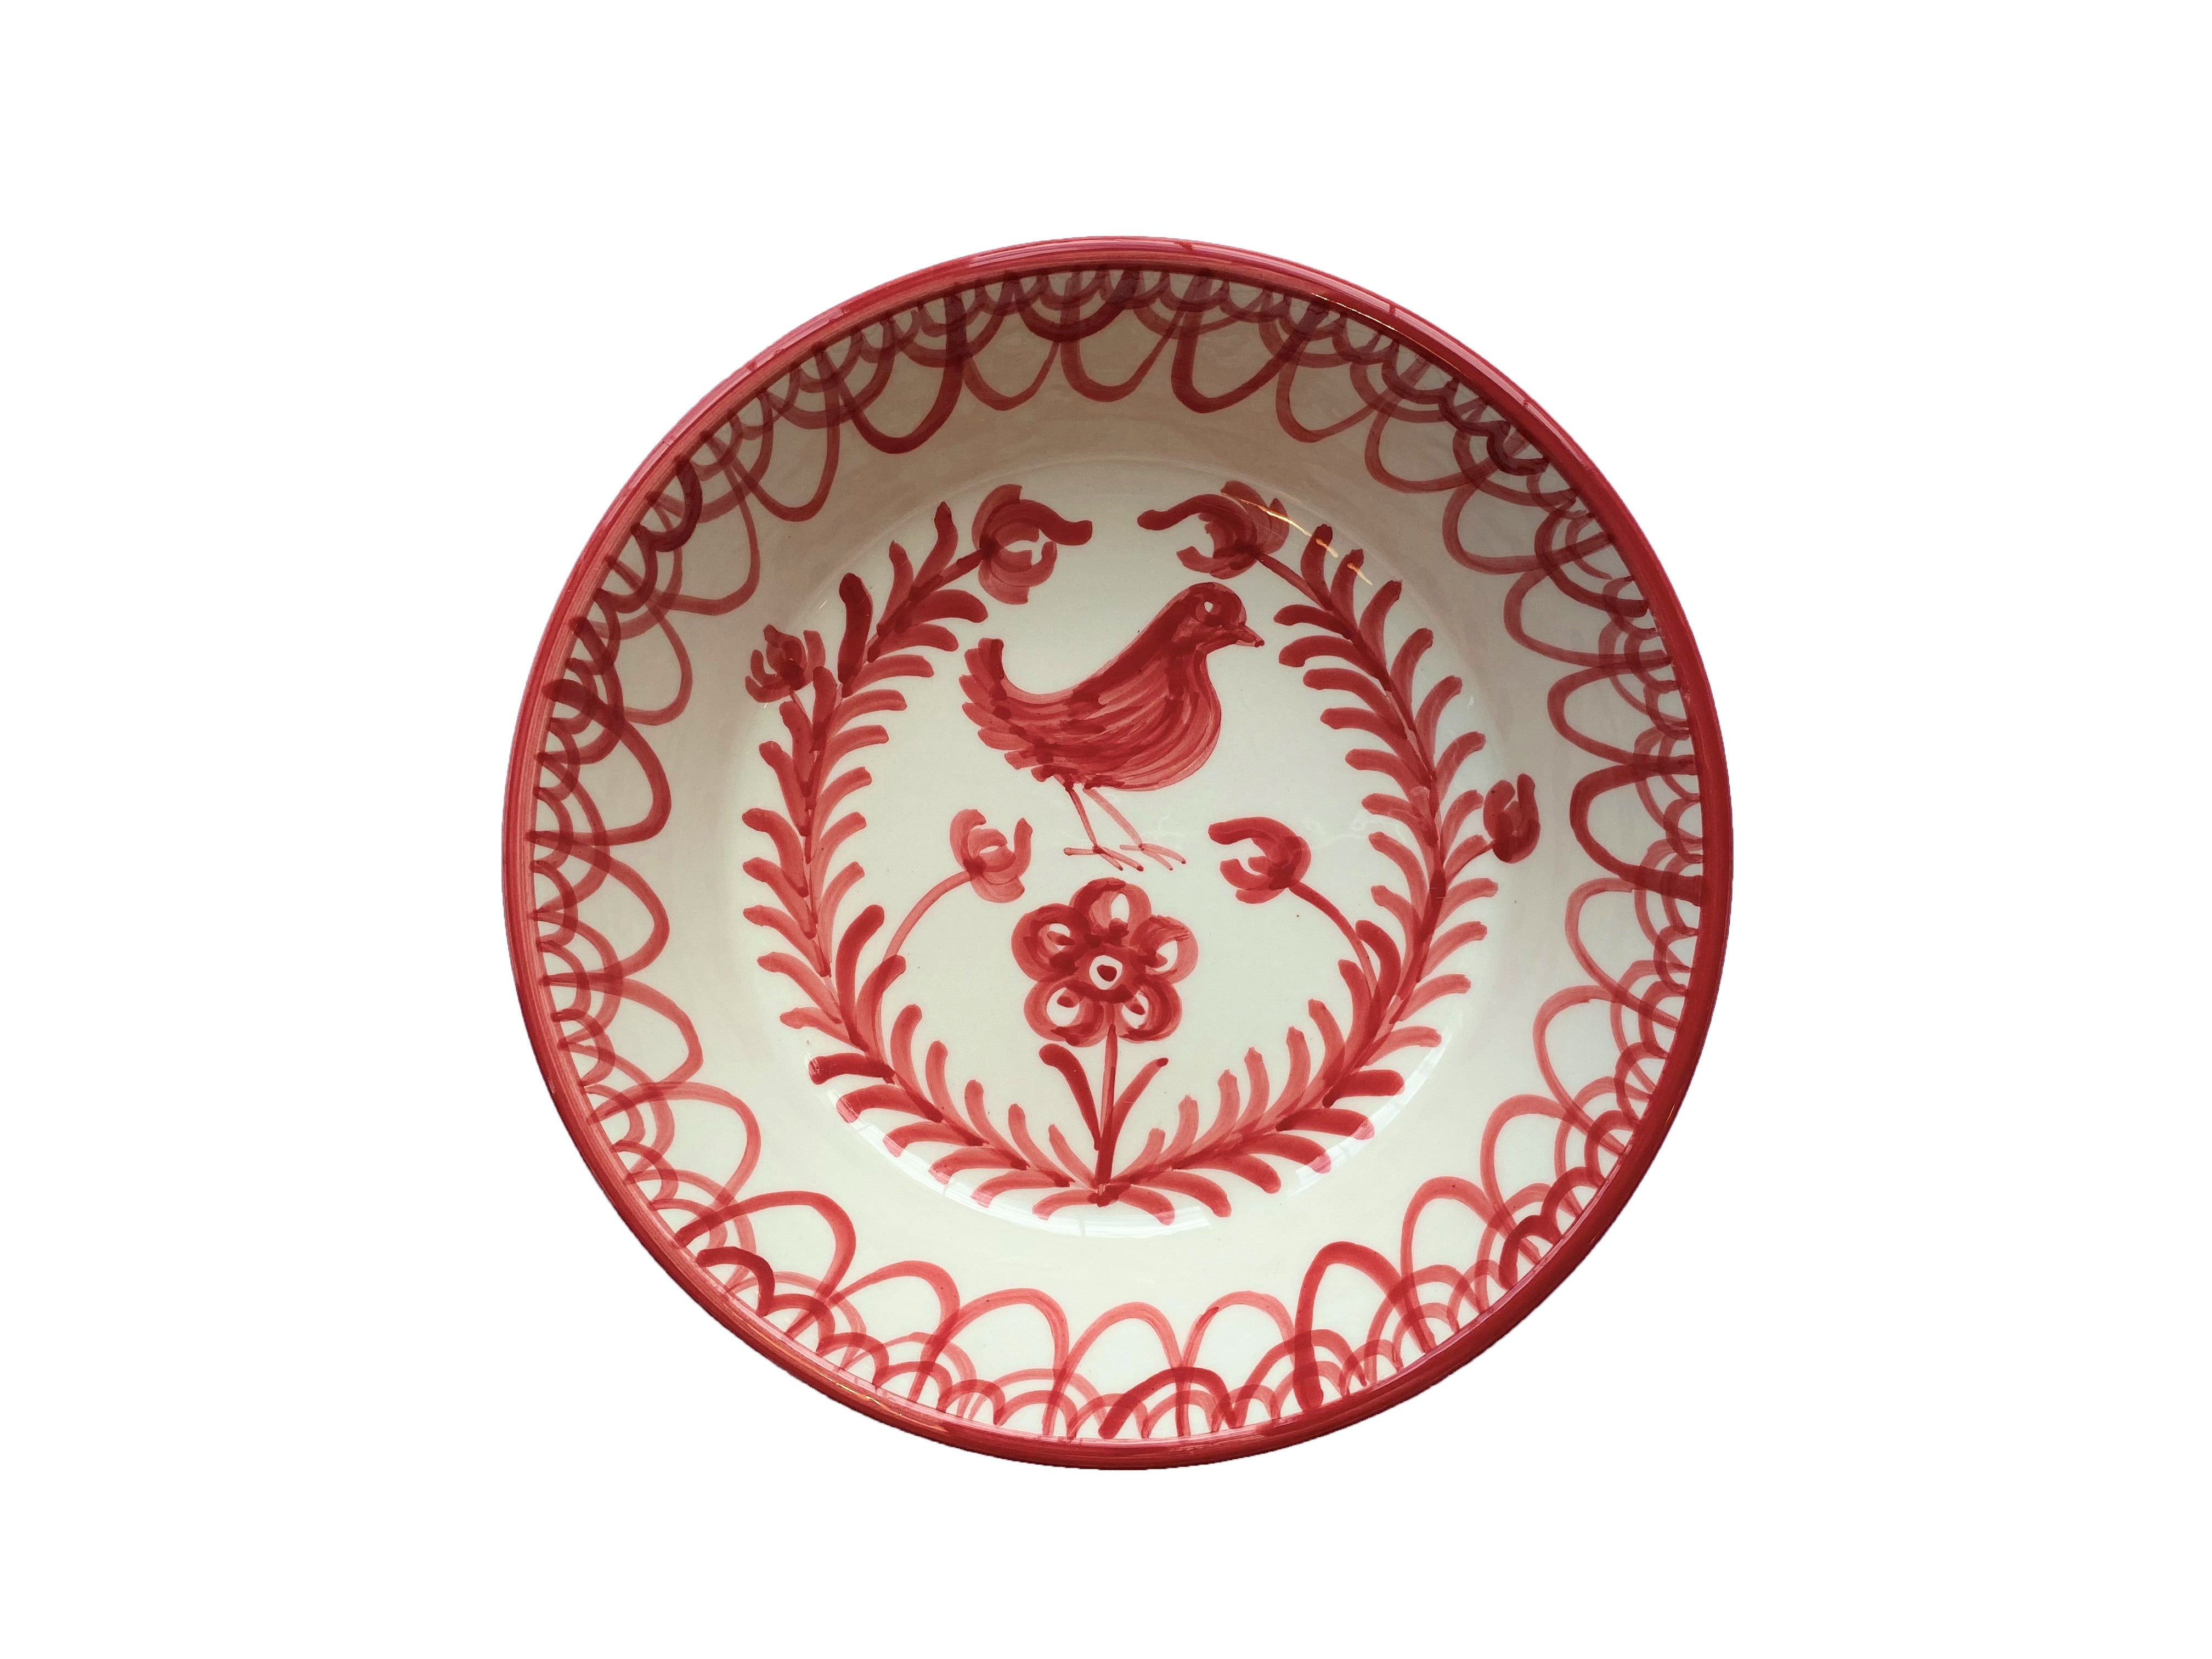 LARGE BOWL (LEBRILLO) -  BURNT SIENNA BIRD DESIGN